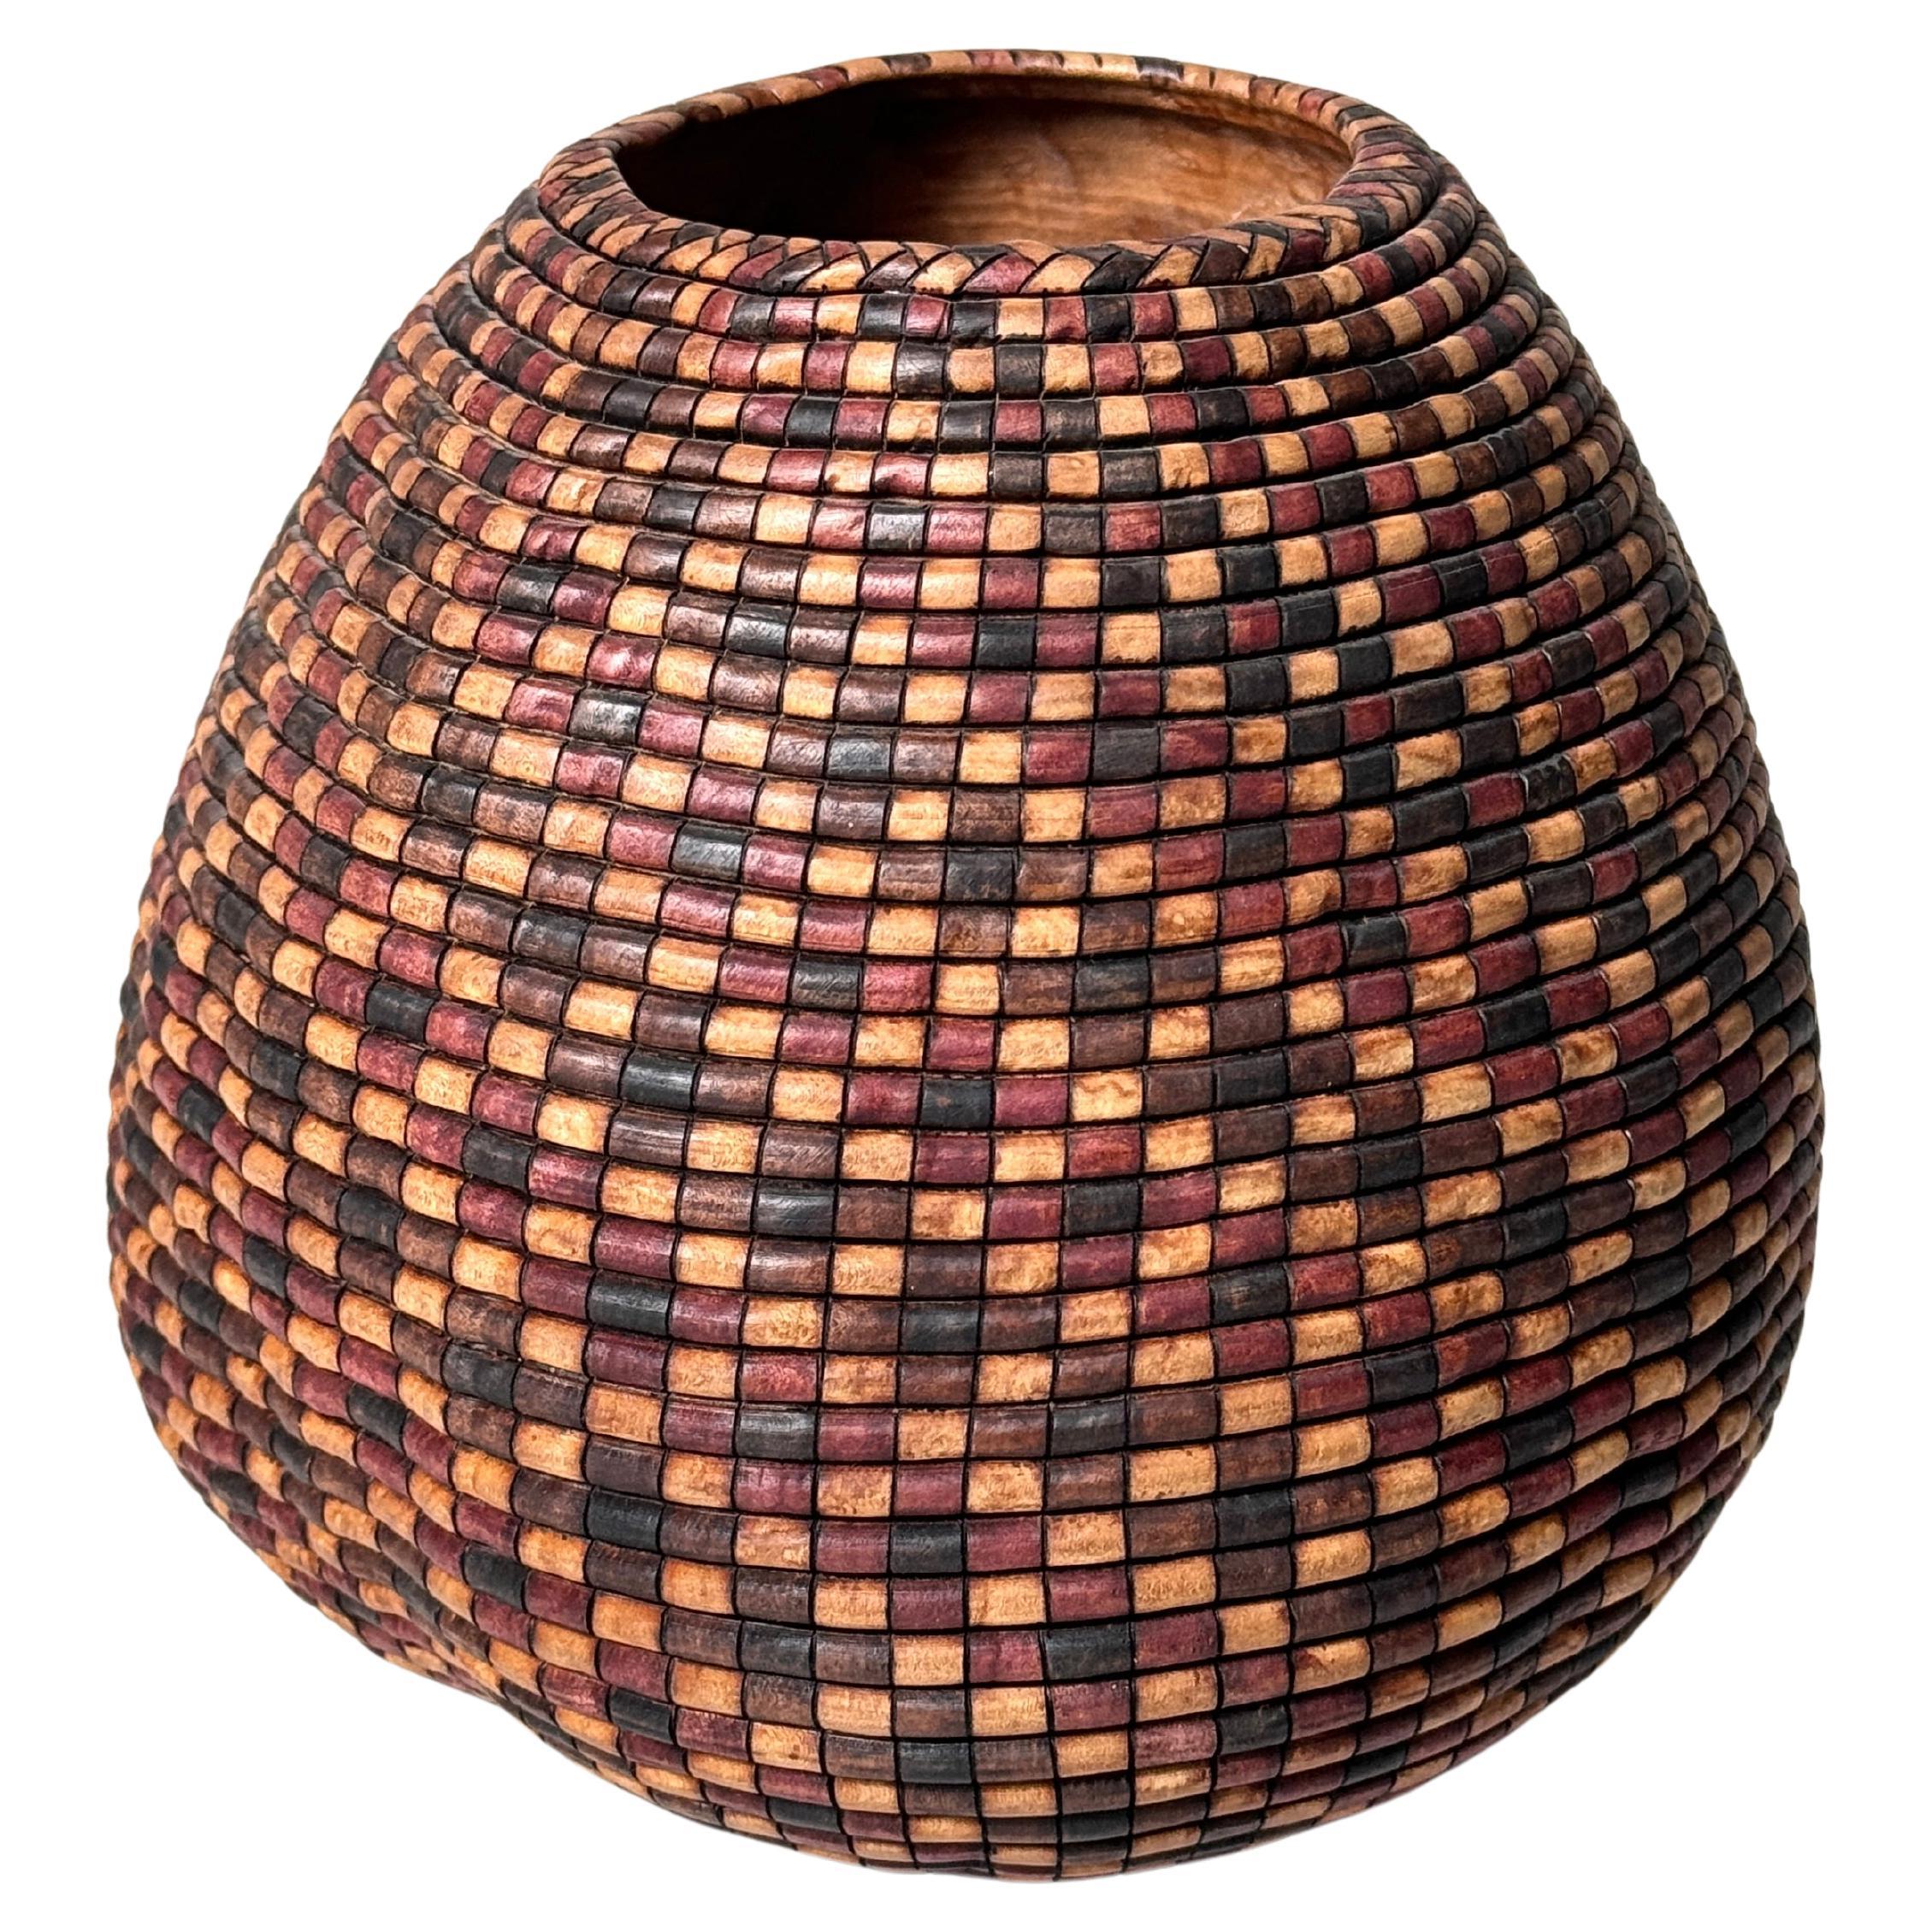 American Studio Turned Wood Basket Illusion Vessel Bowl by David Nittmann 1990s For Sale